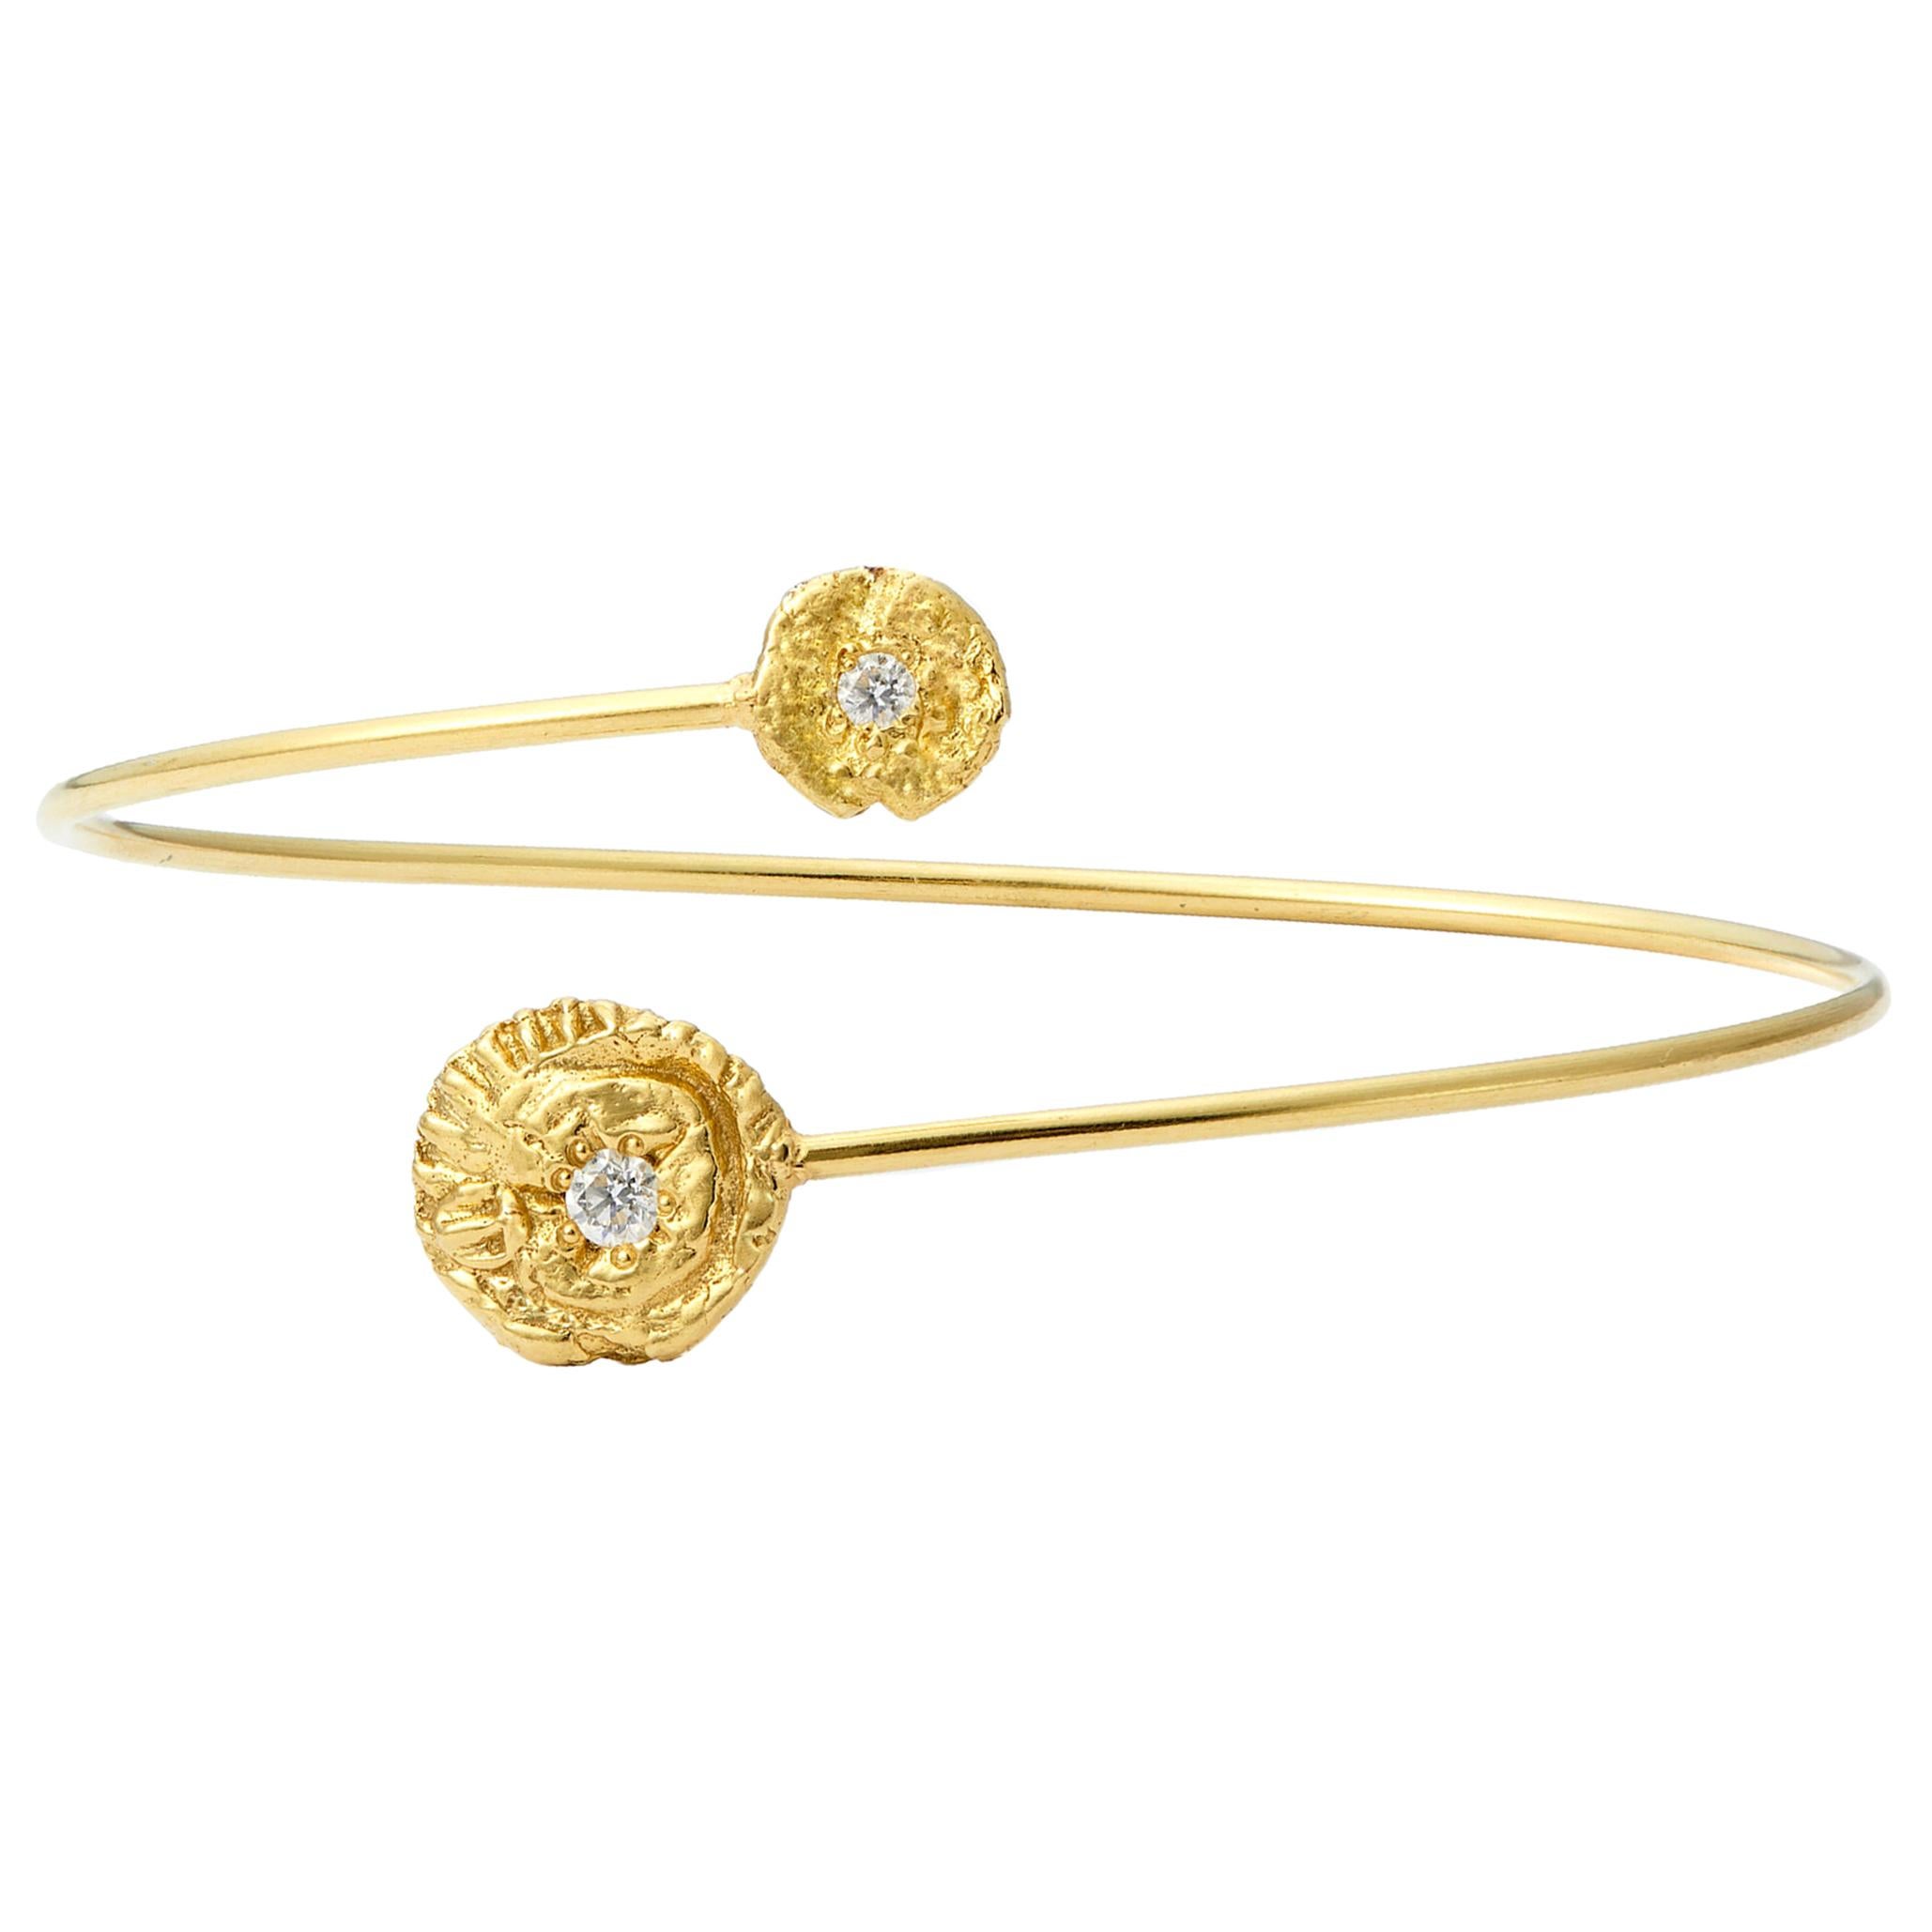 Susan Lister Locke “Sea Star” & “Seaquin” Bangle Bracelet with 0.20ct Diamonds For Sale